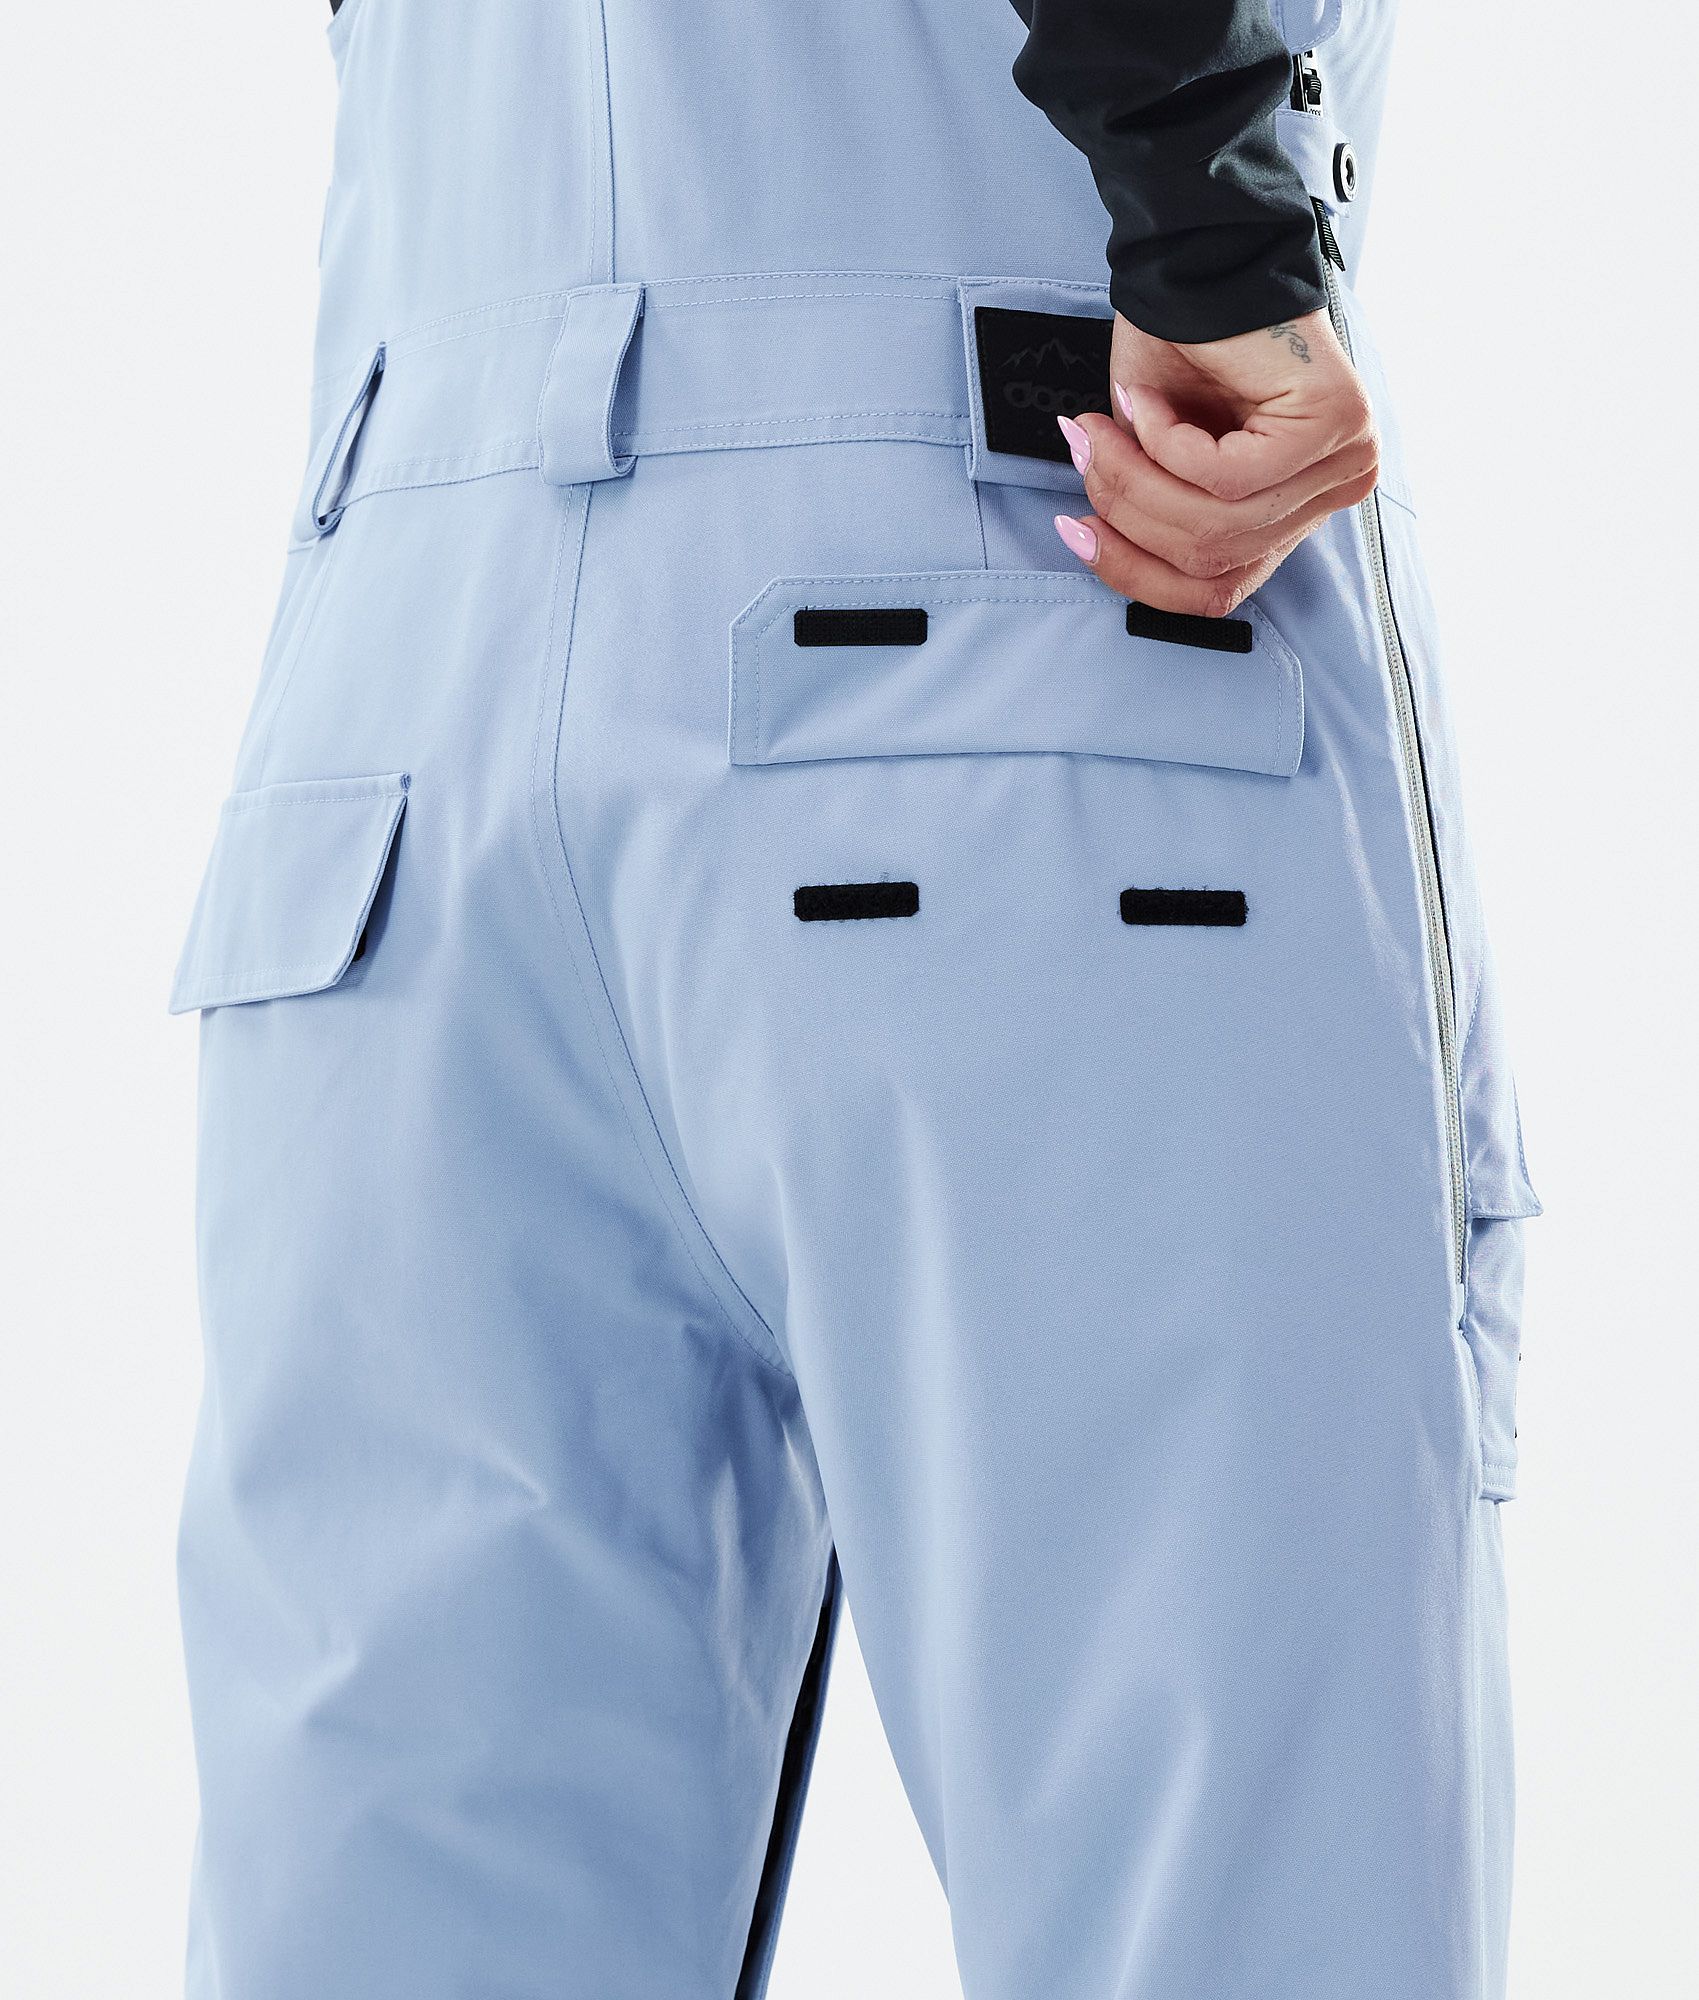 Buy Ruhfab Regular Fit Cotton Trouser Pants for Women/Ladies Cotton Pants ( Sky-Blue/Medium) at Amazon.in